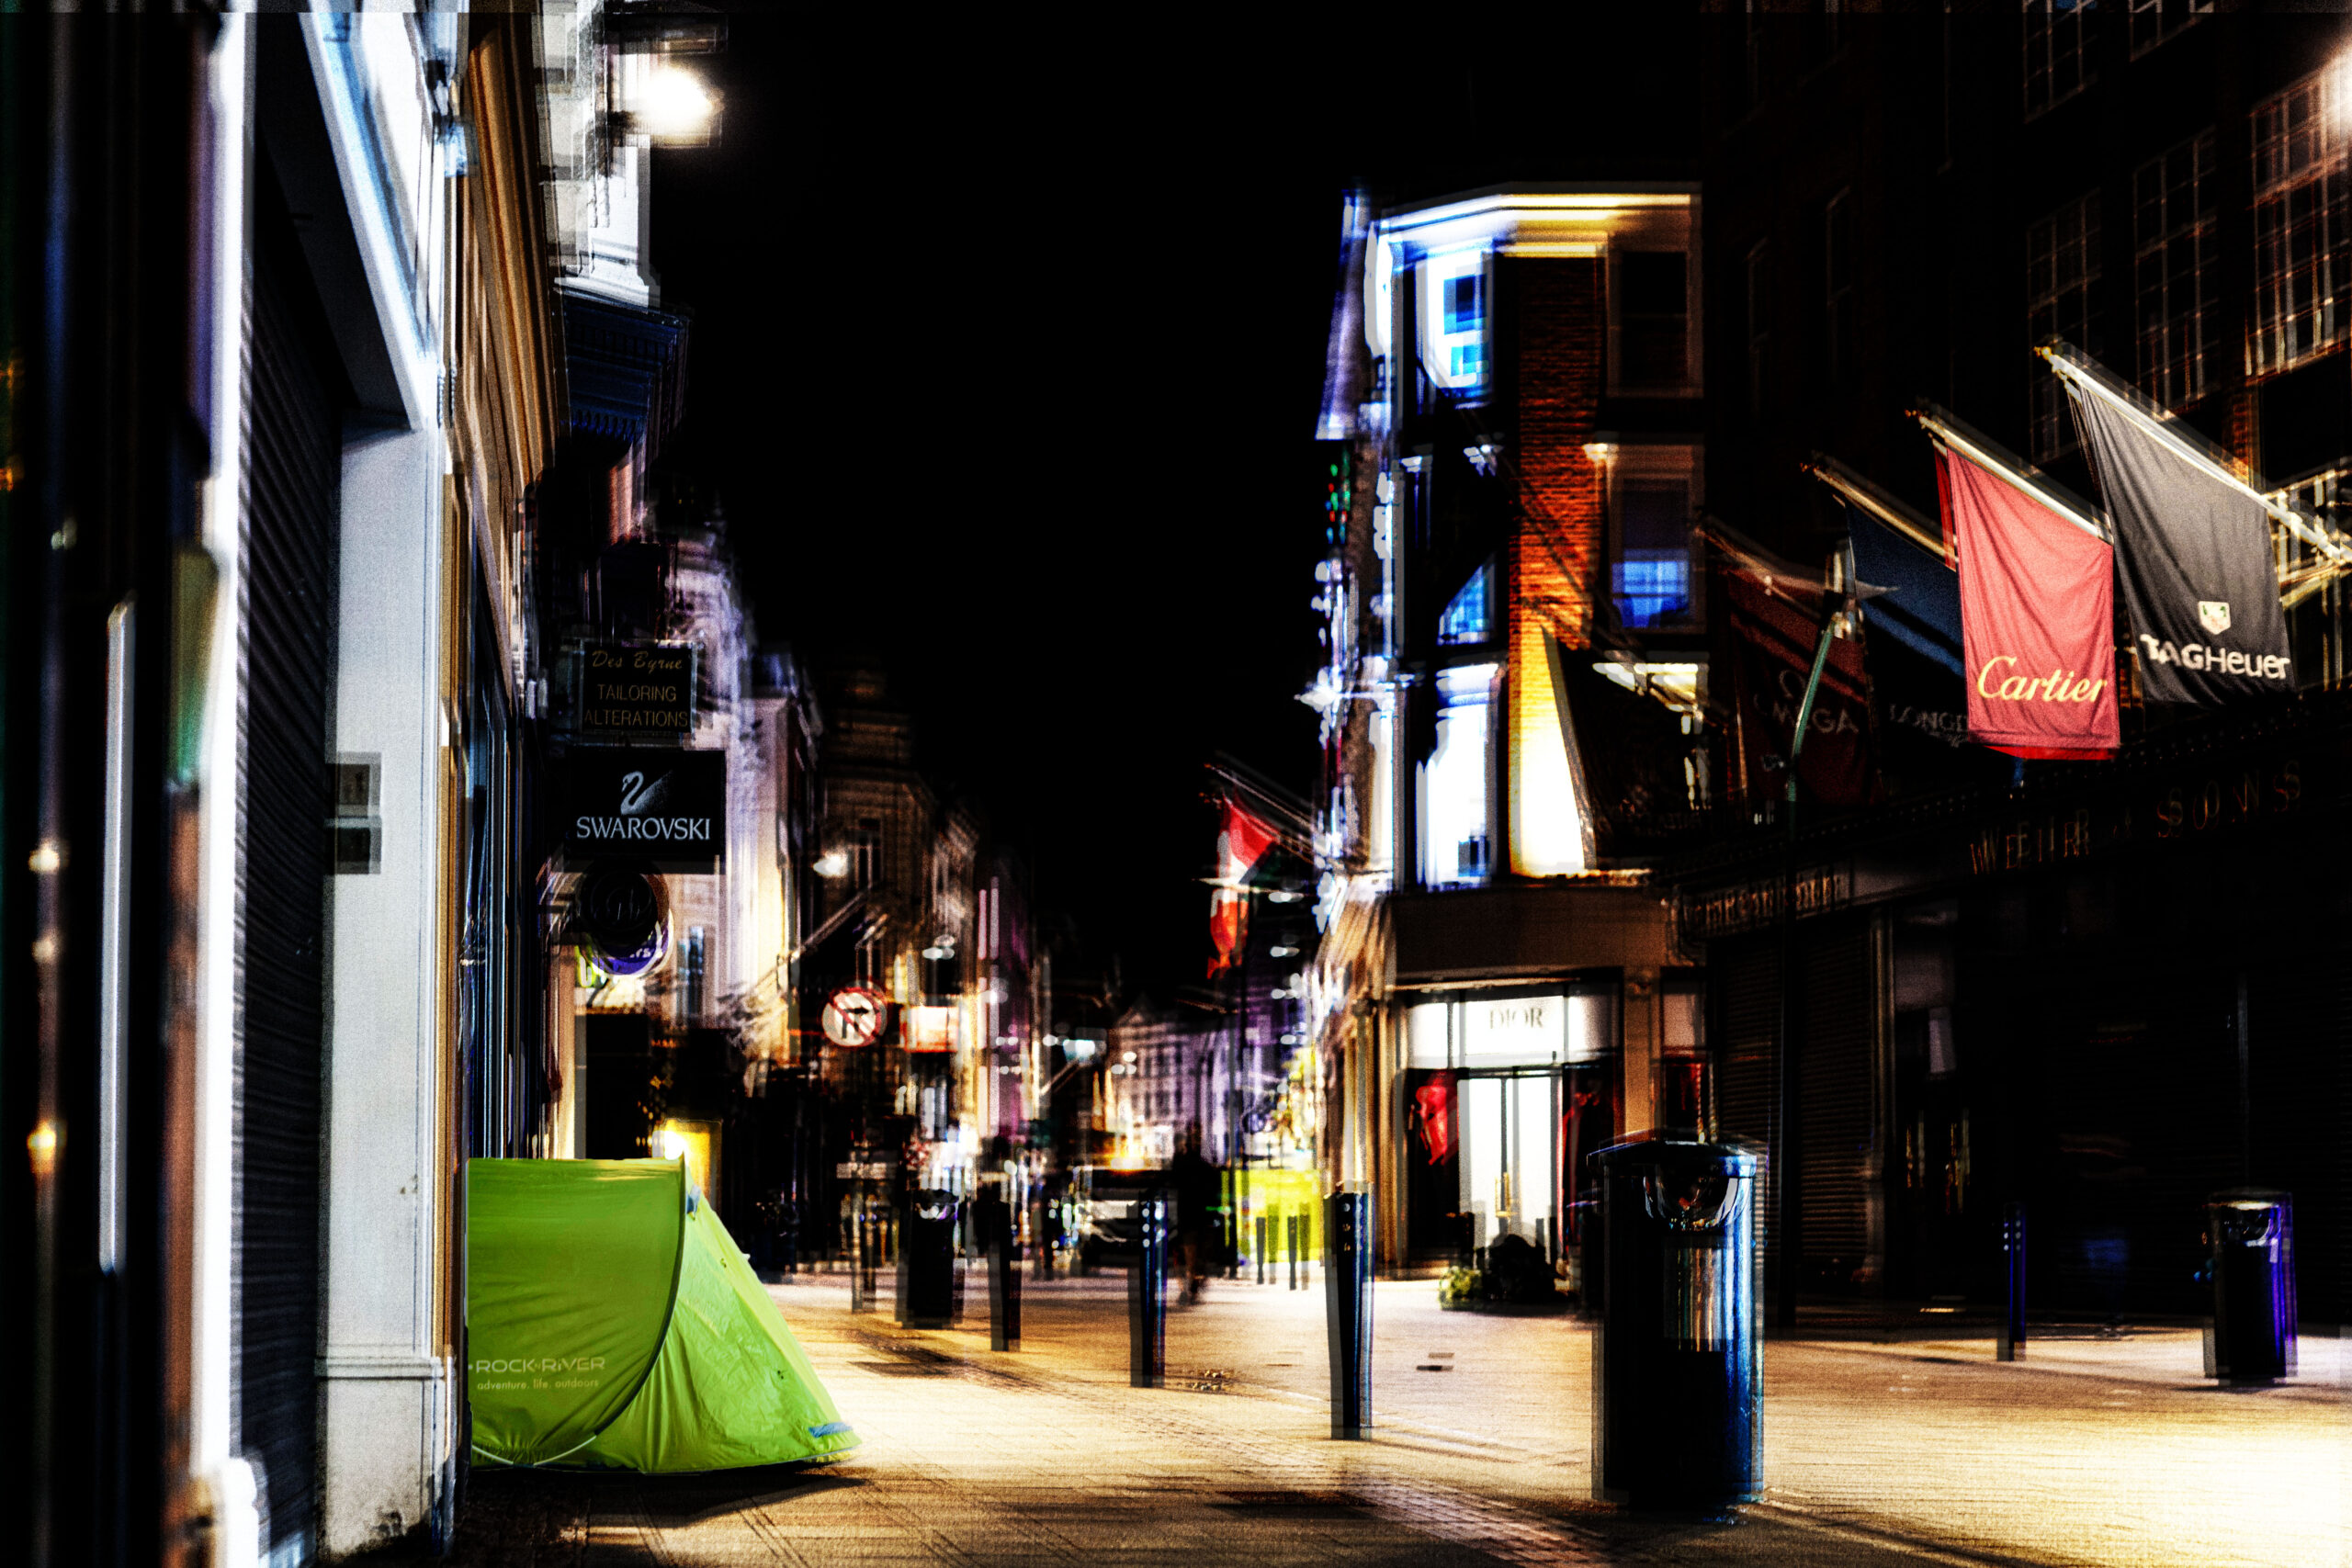 Sleeping Rough - Streets of Dublin